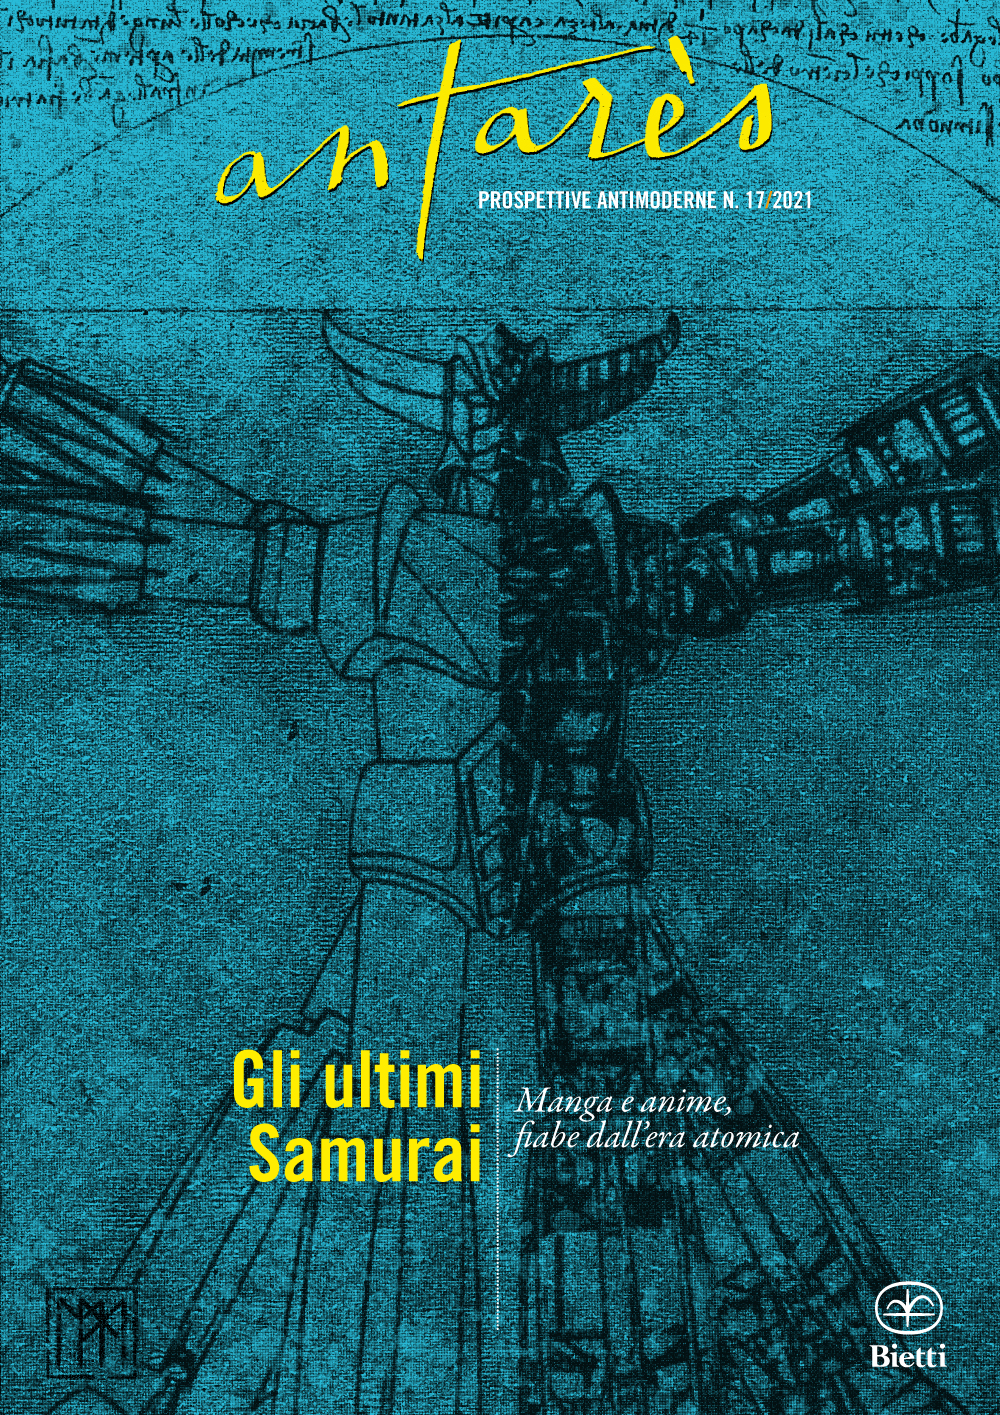 Gli ultimi Samurai - Anime e manga, fiabe dall'era atomica